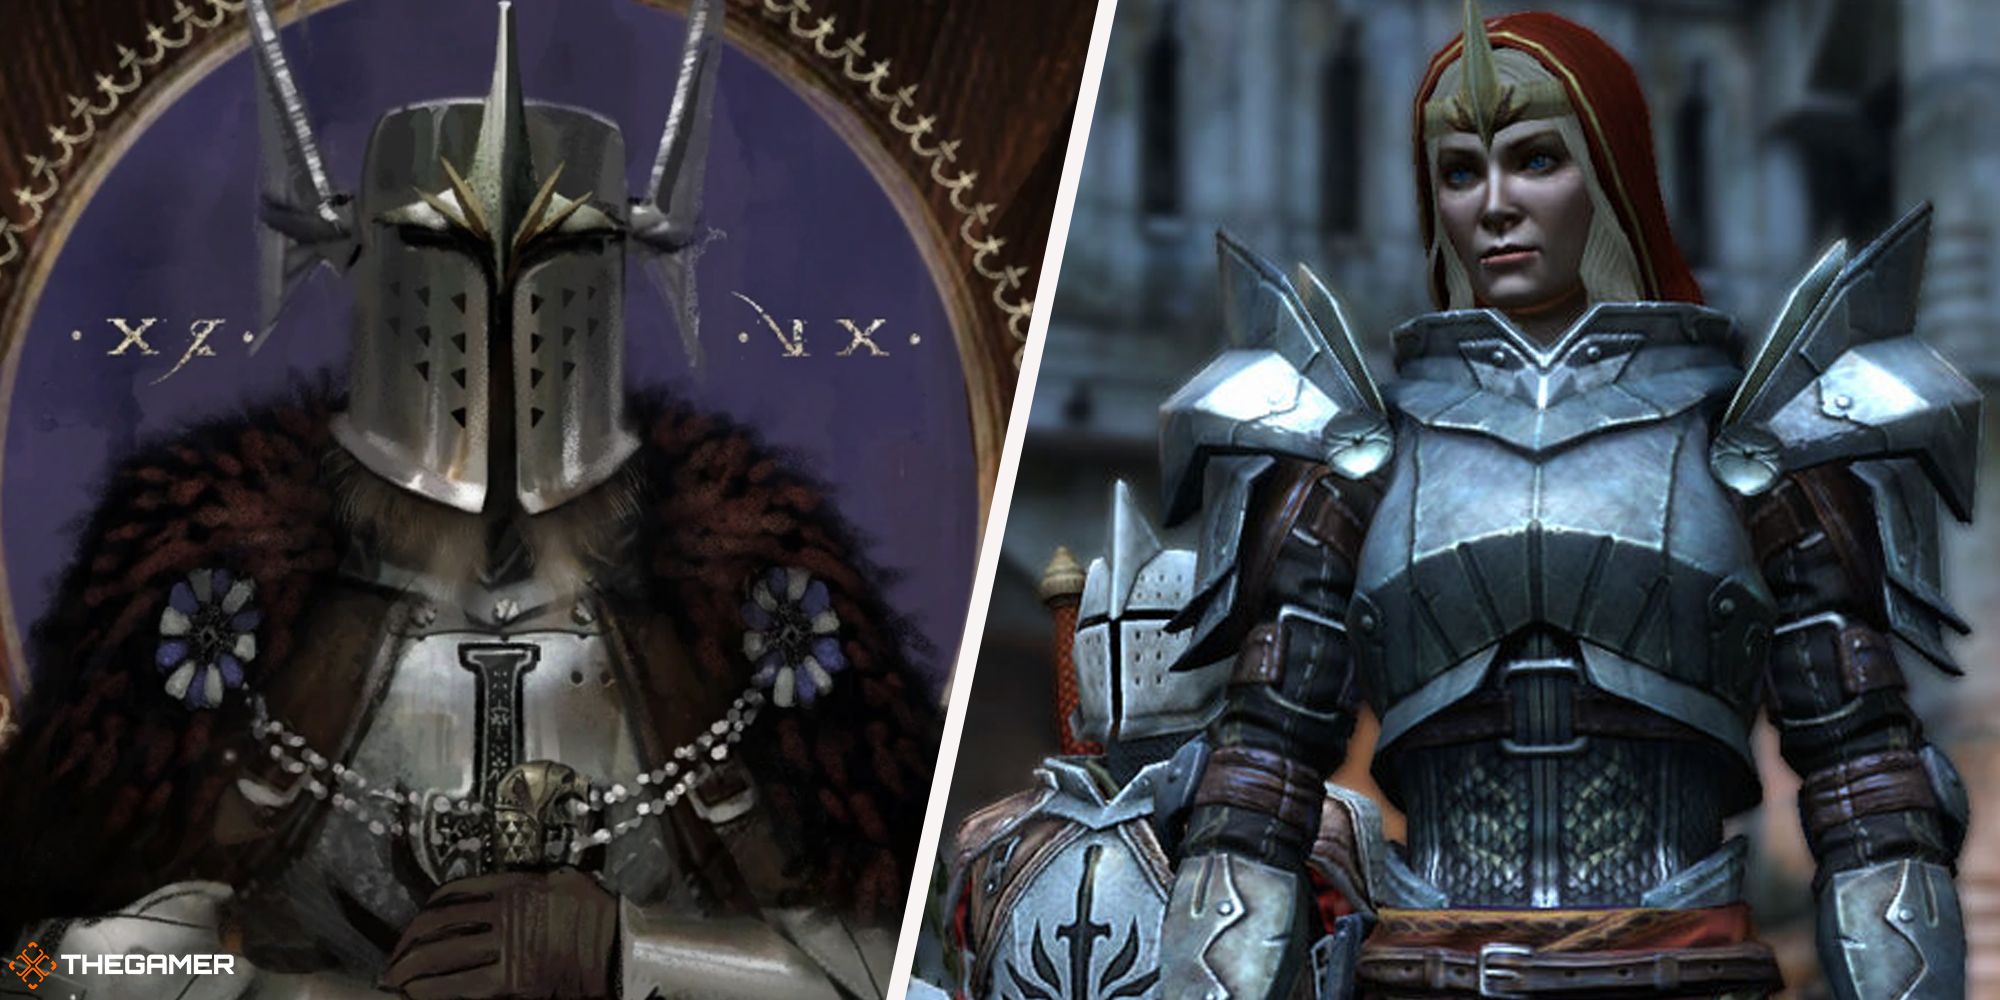 Dragon Age - Templar art on right, knight commander meredith on left